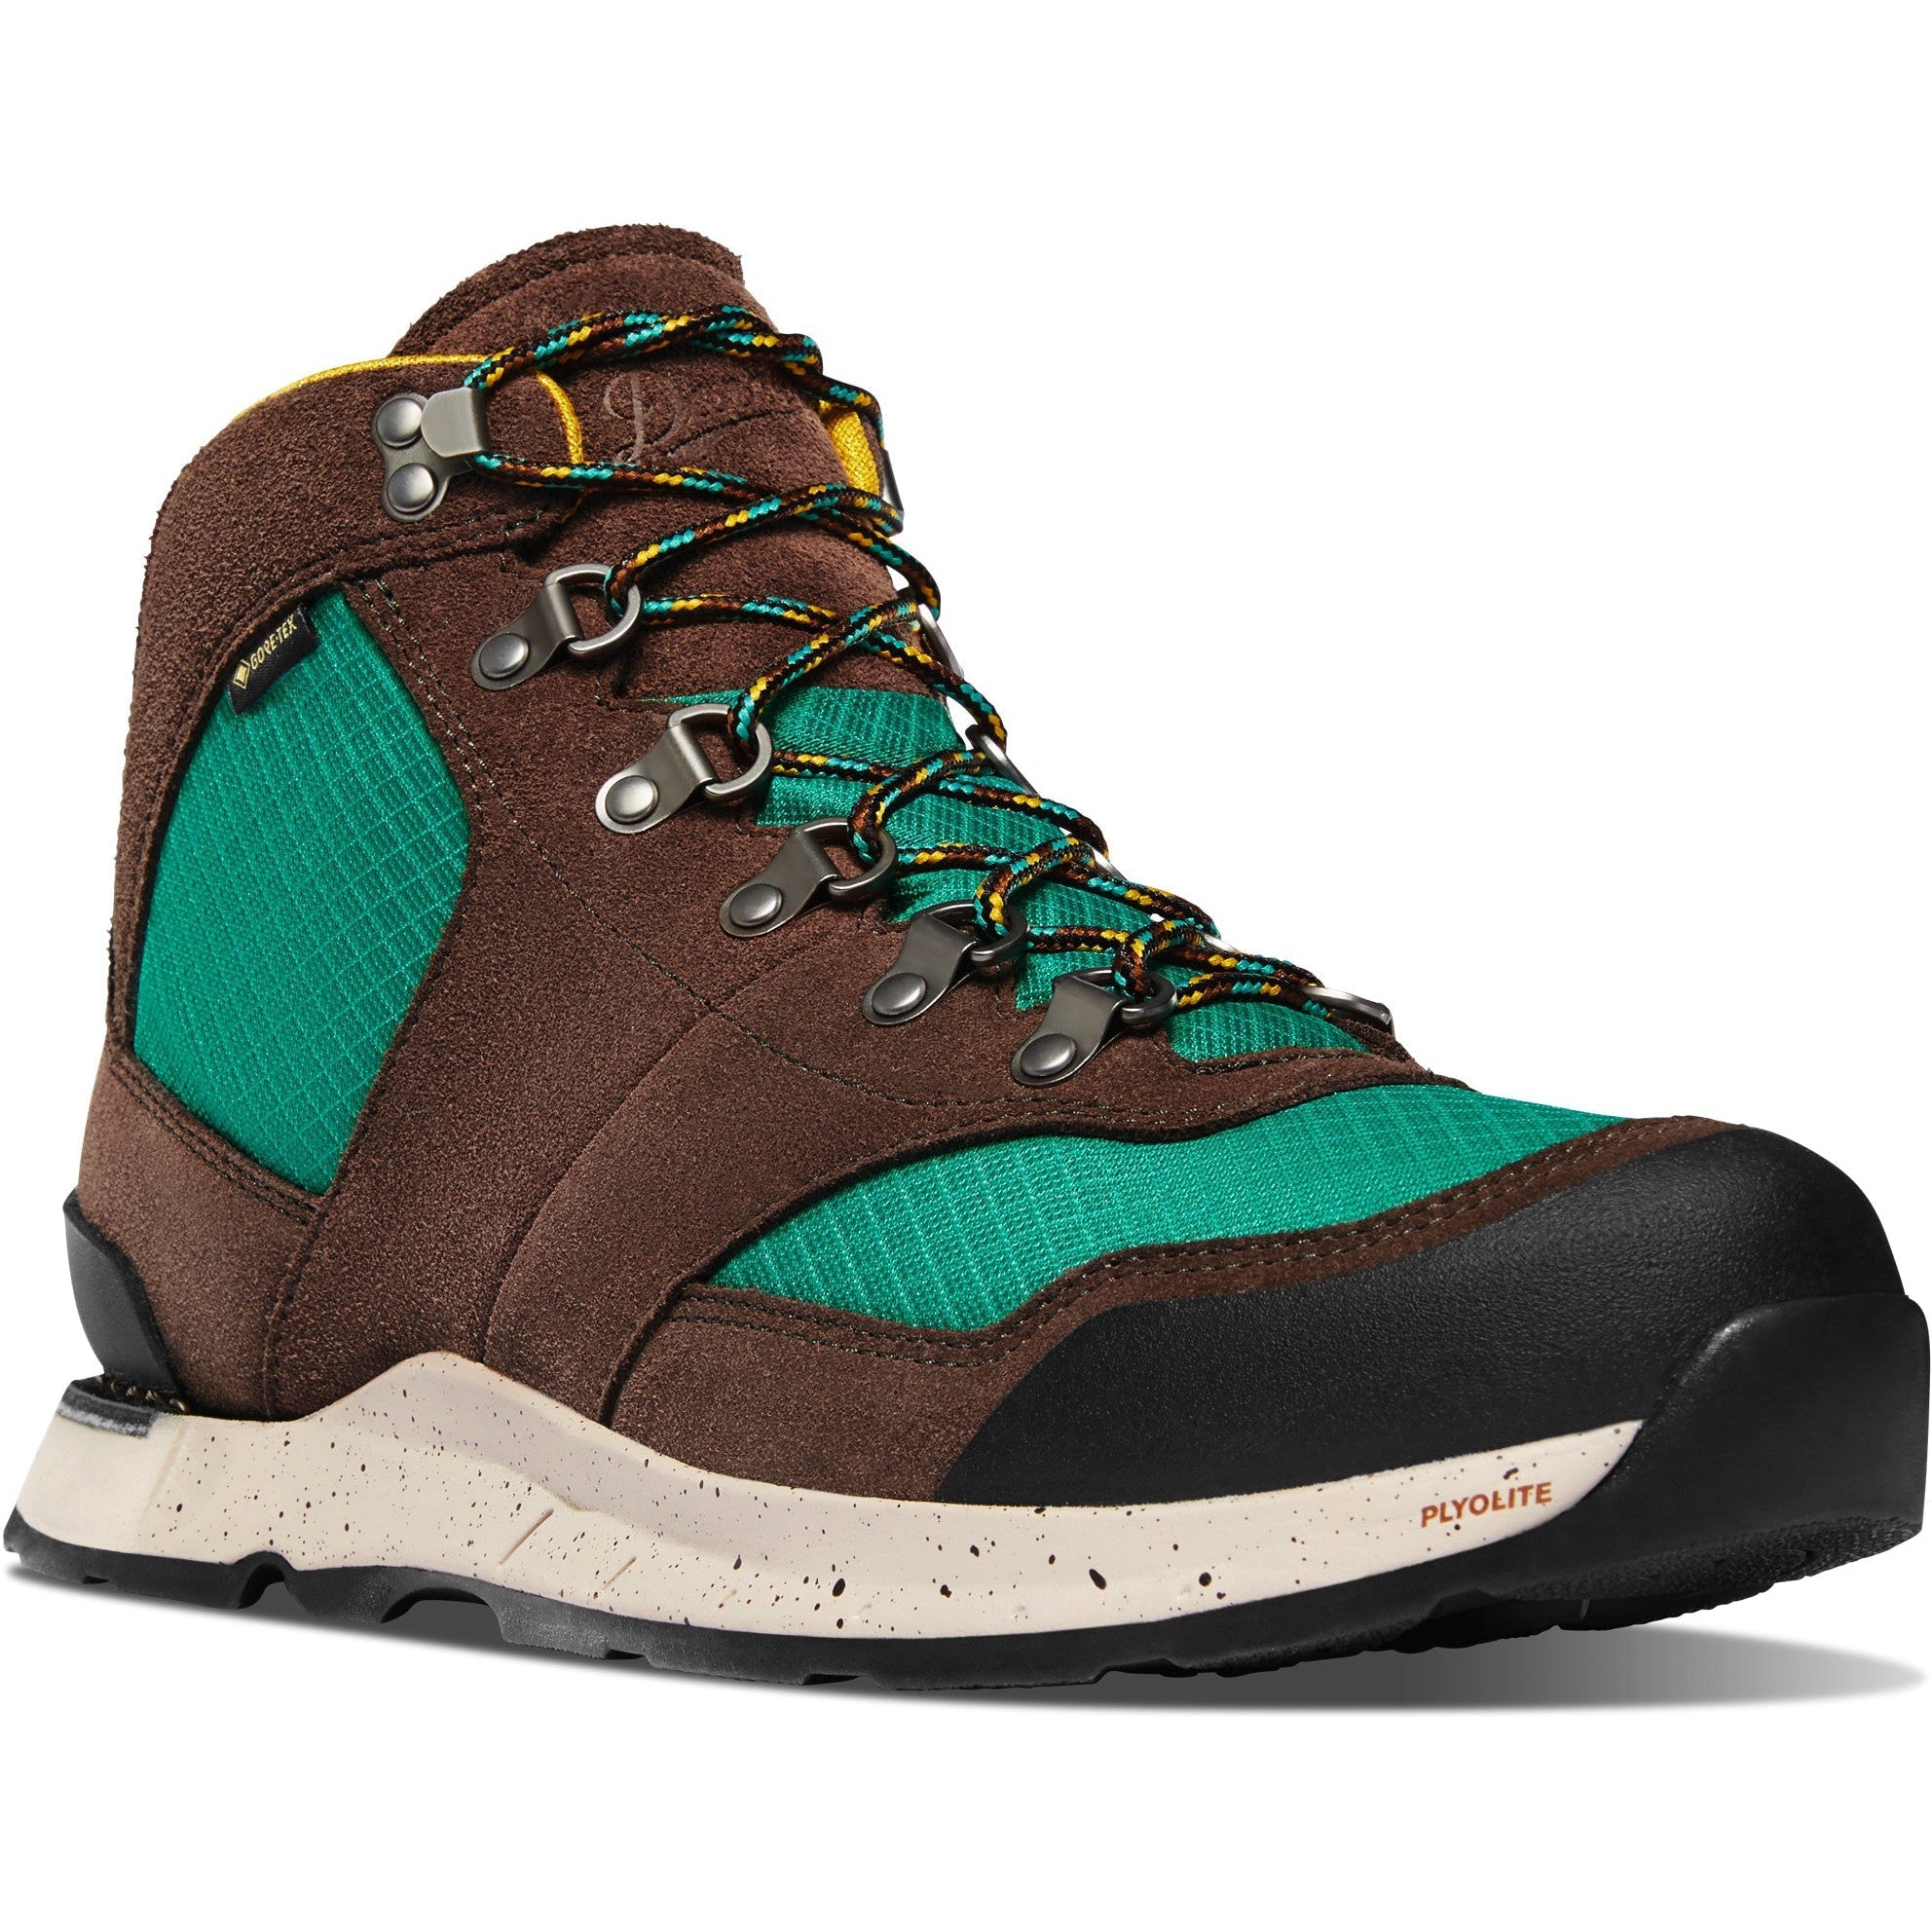 Danner Men's Free Spirit 4.5" WP Lifestyle Boot - Dark Earth - 37532 7 / Medium / Brown - Overlook Boots